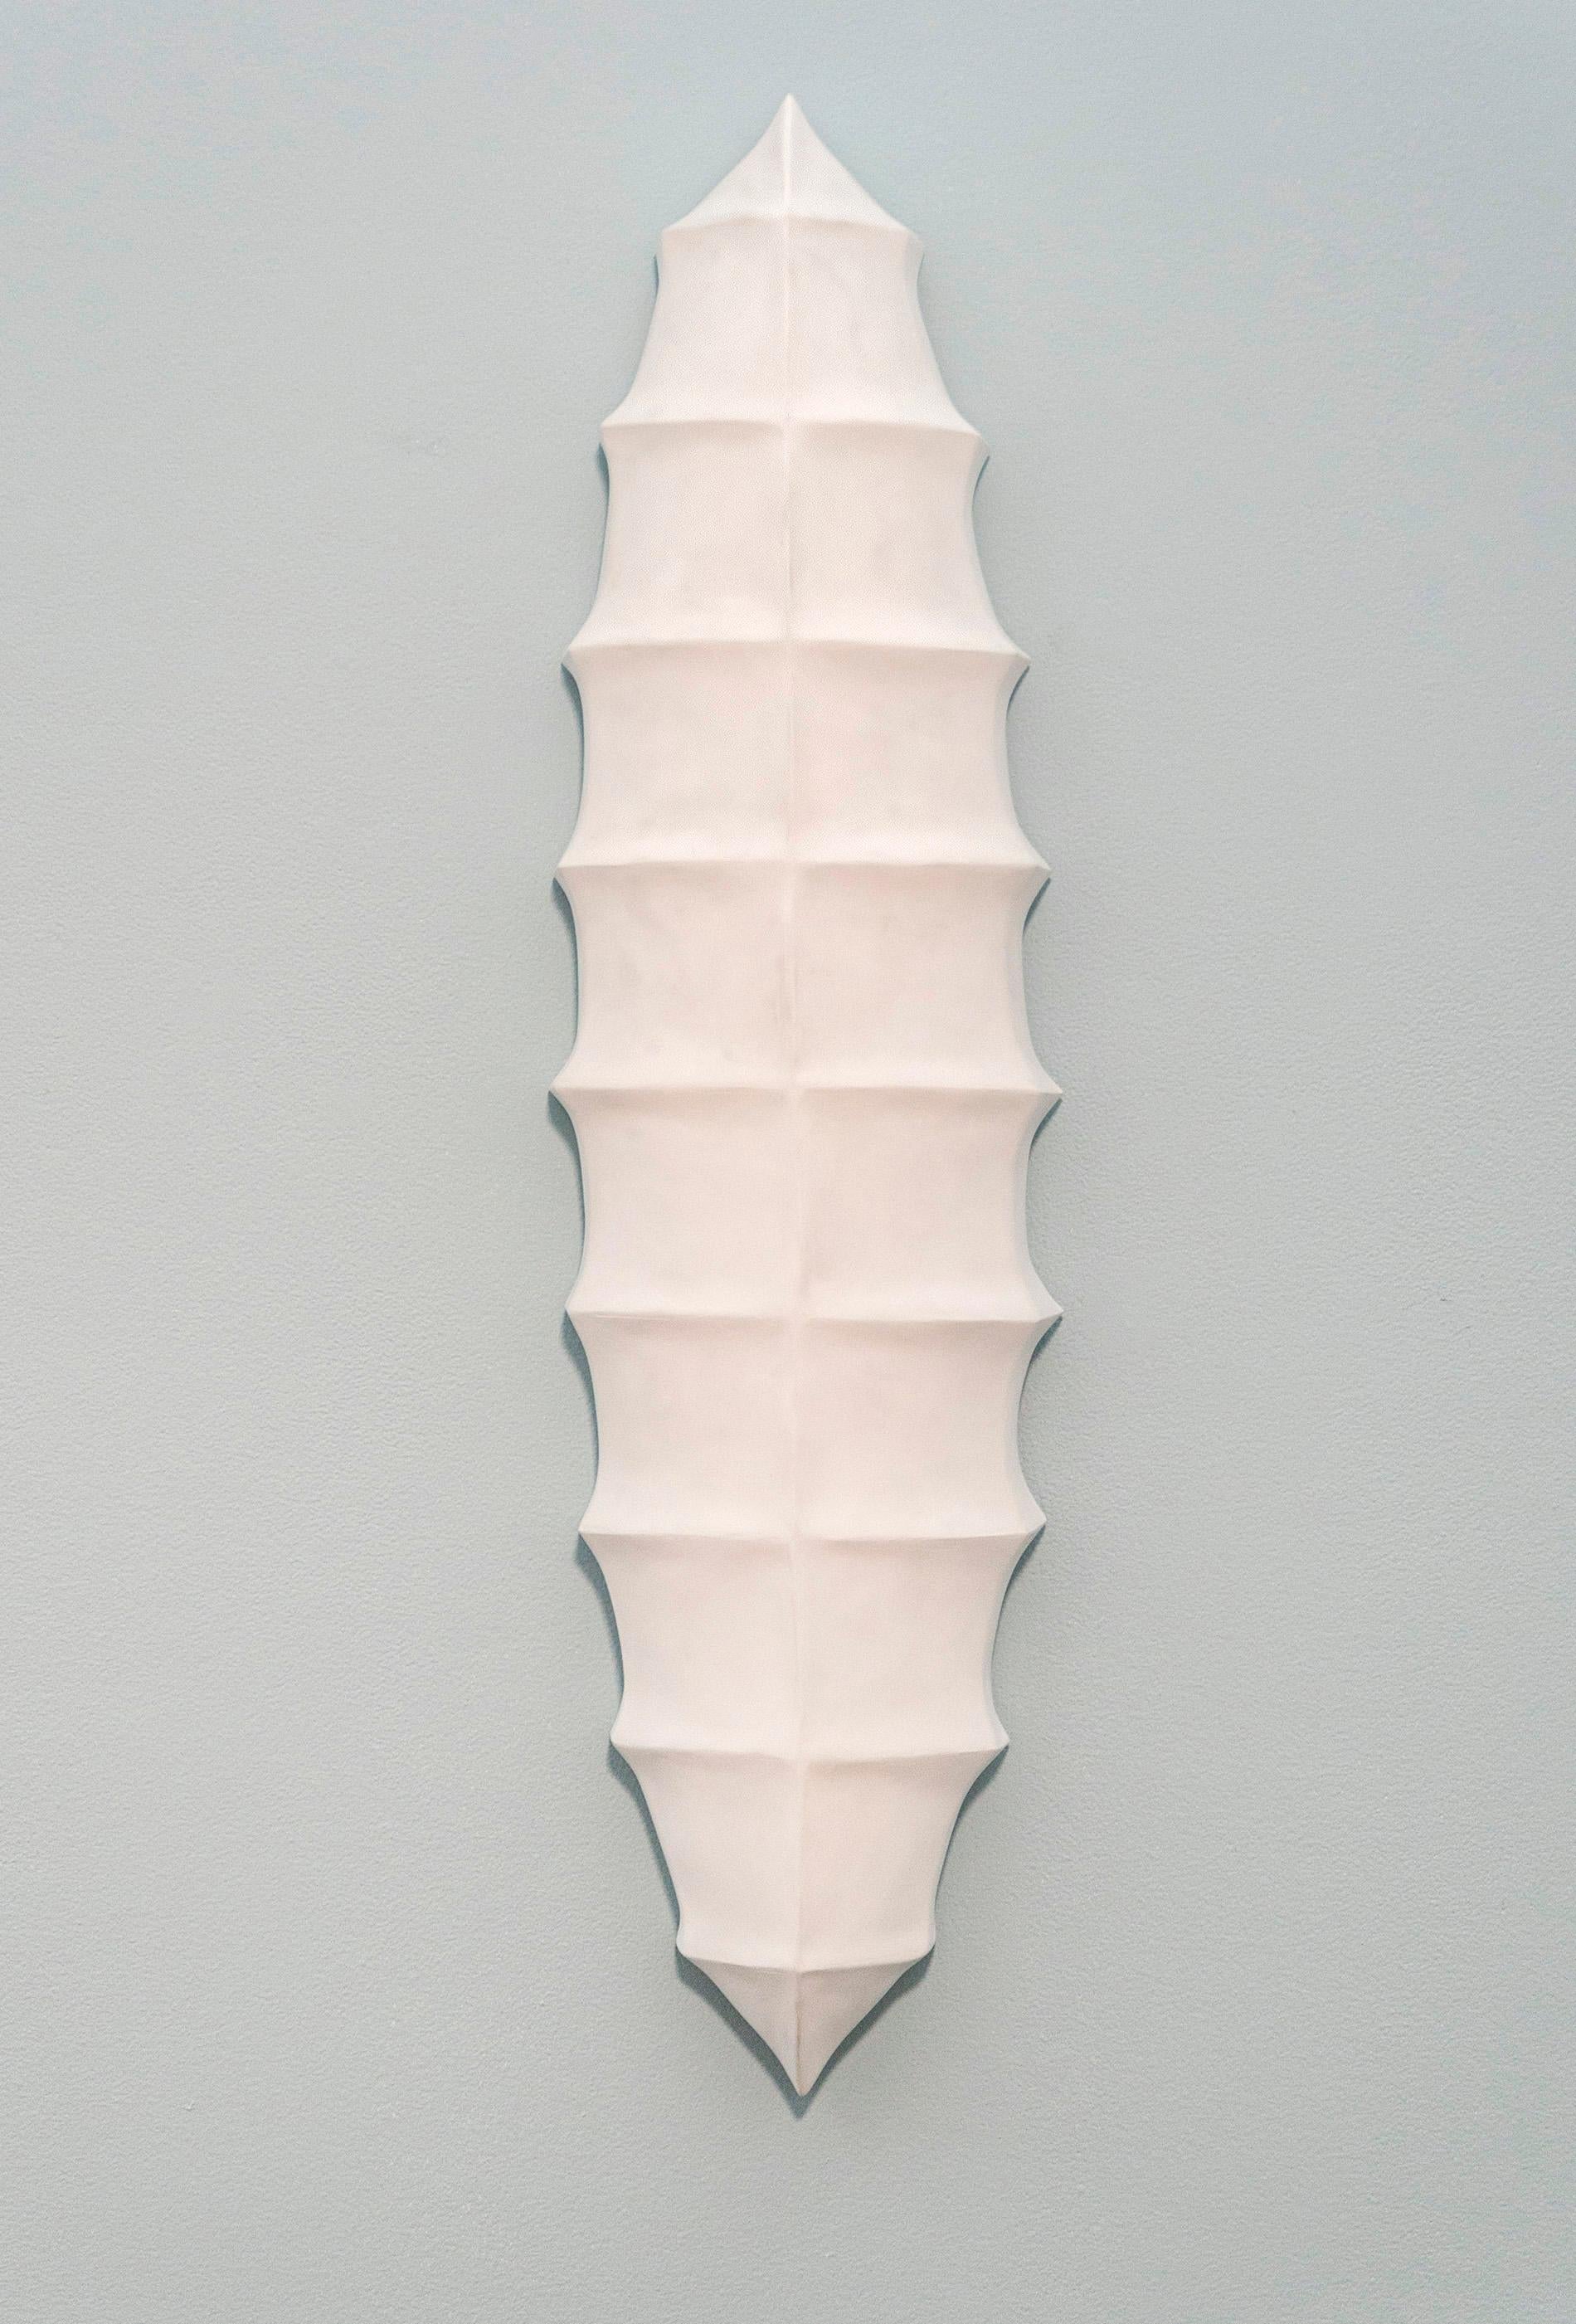 Jana Osterman Abstract Sculpture - Biomorphic No 1 - white, minimalist, abstract, Venetian plaster wall sculpture